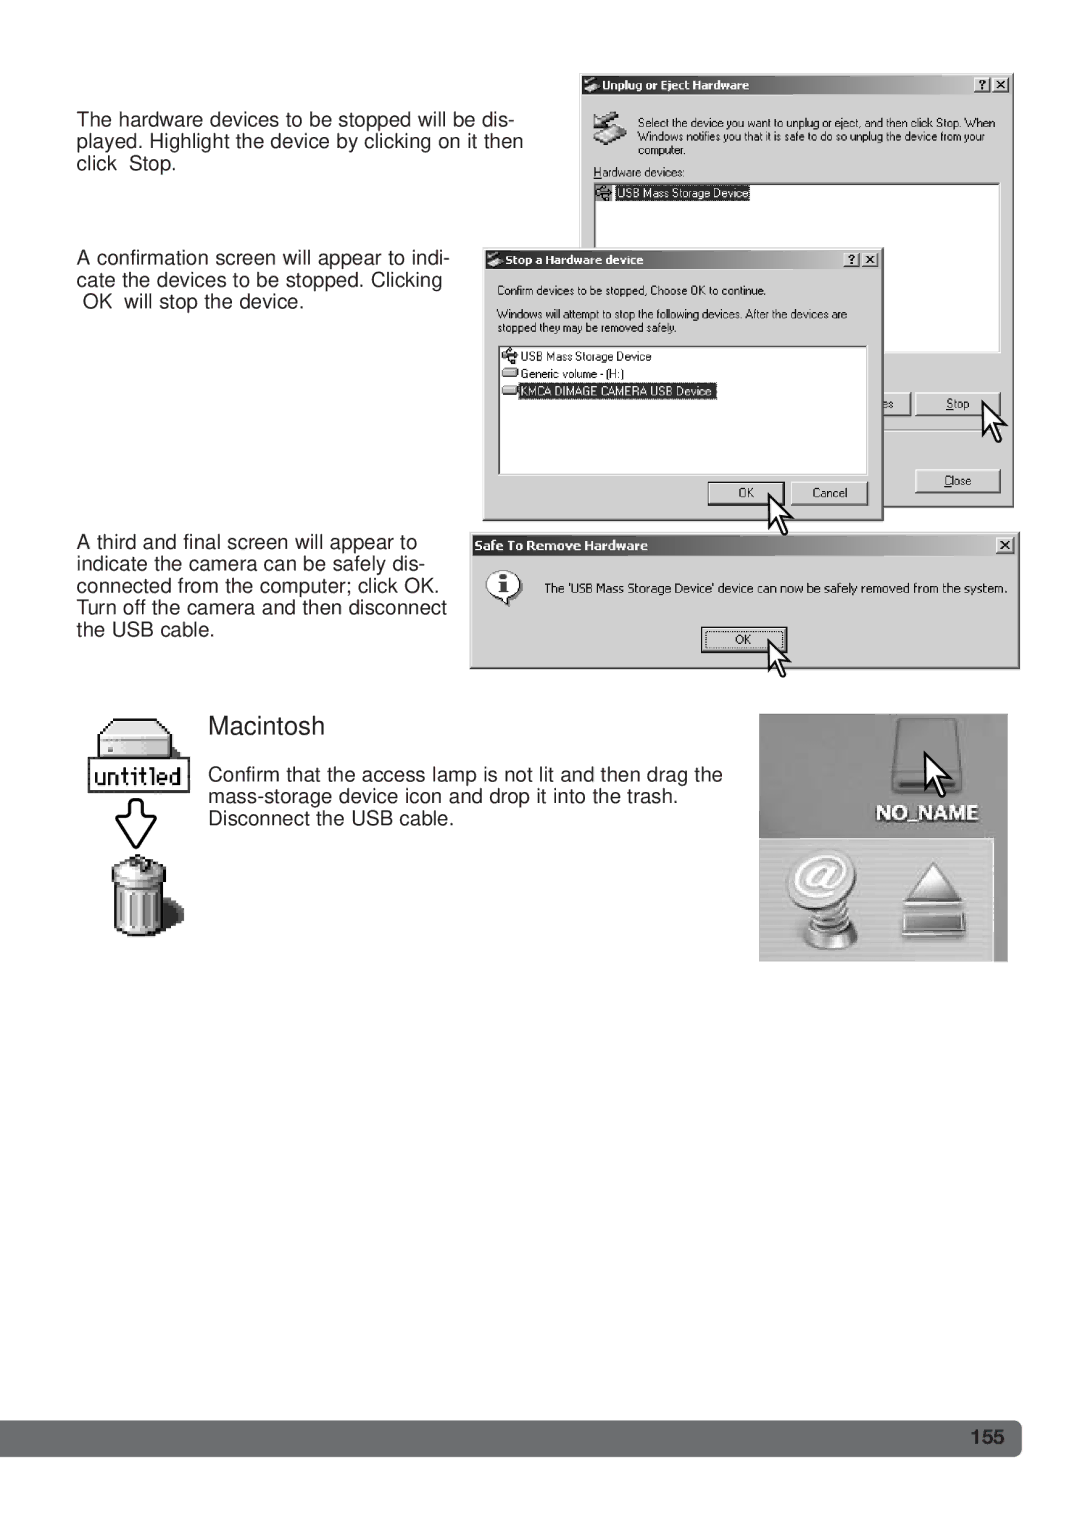 Konica Minolta DiMAGE_A2 instruction manual Macintosh, 155 